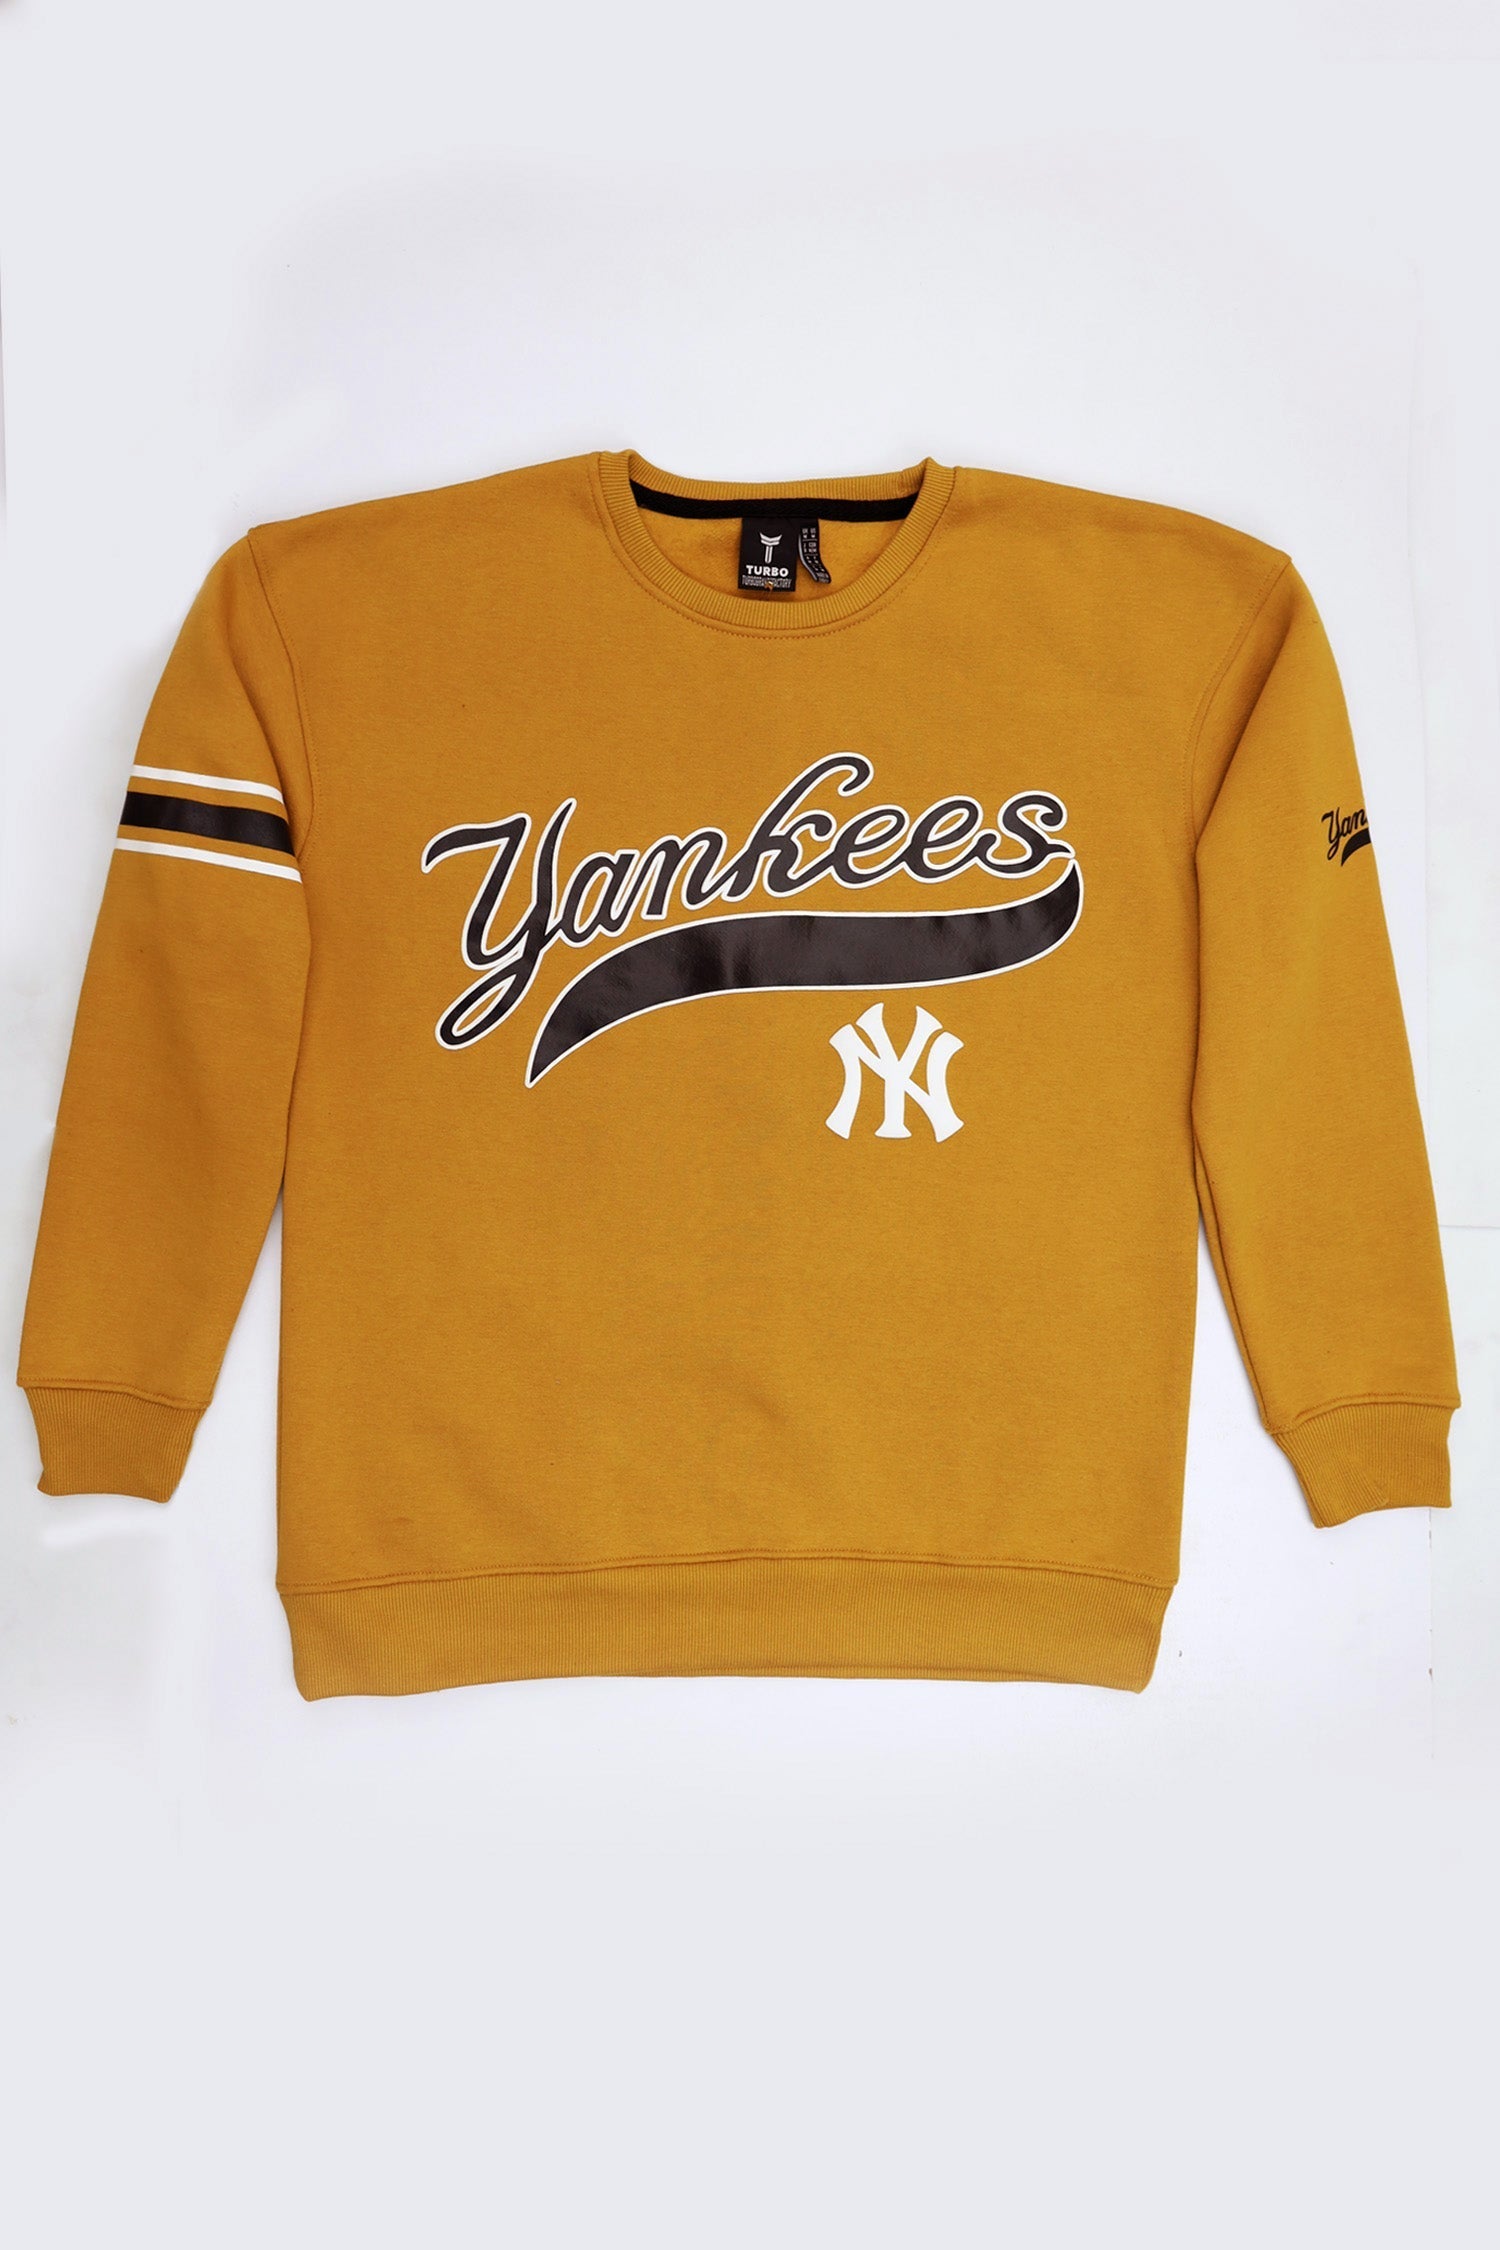 NY Ynkes Printed Slogan Oversized Sweatshirt In Mustard